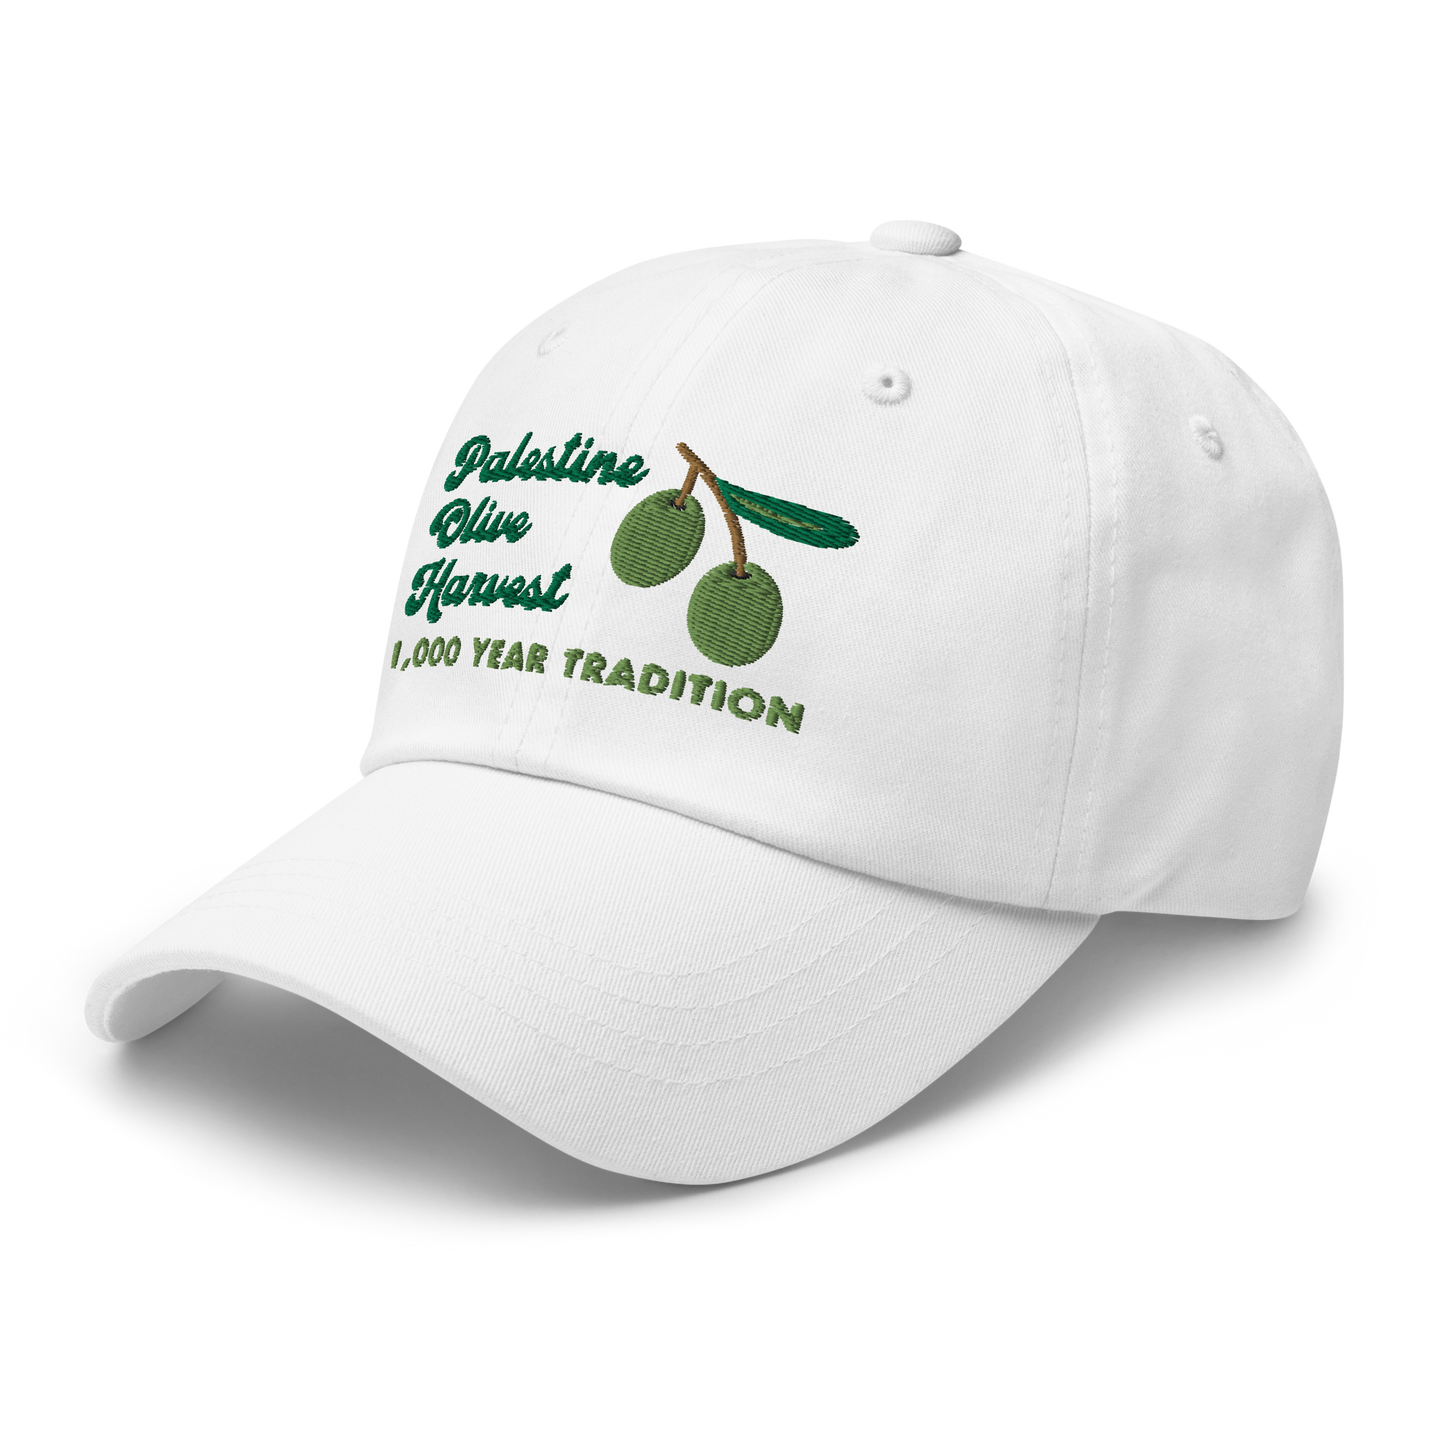 Palestine Olive Harvest Dad Hat